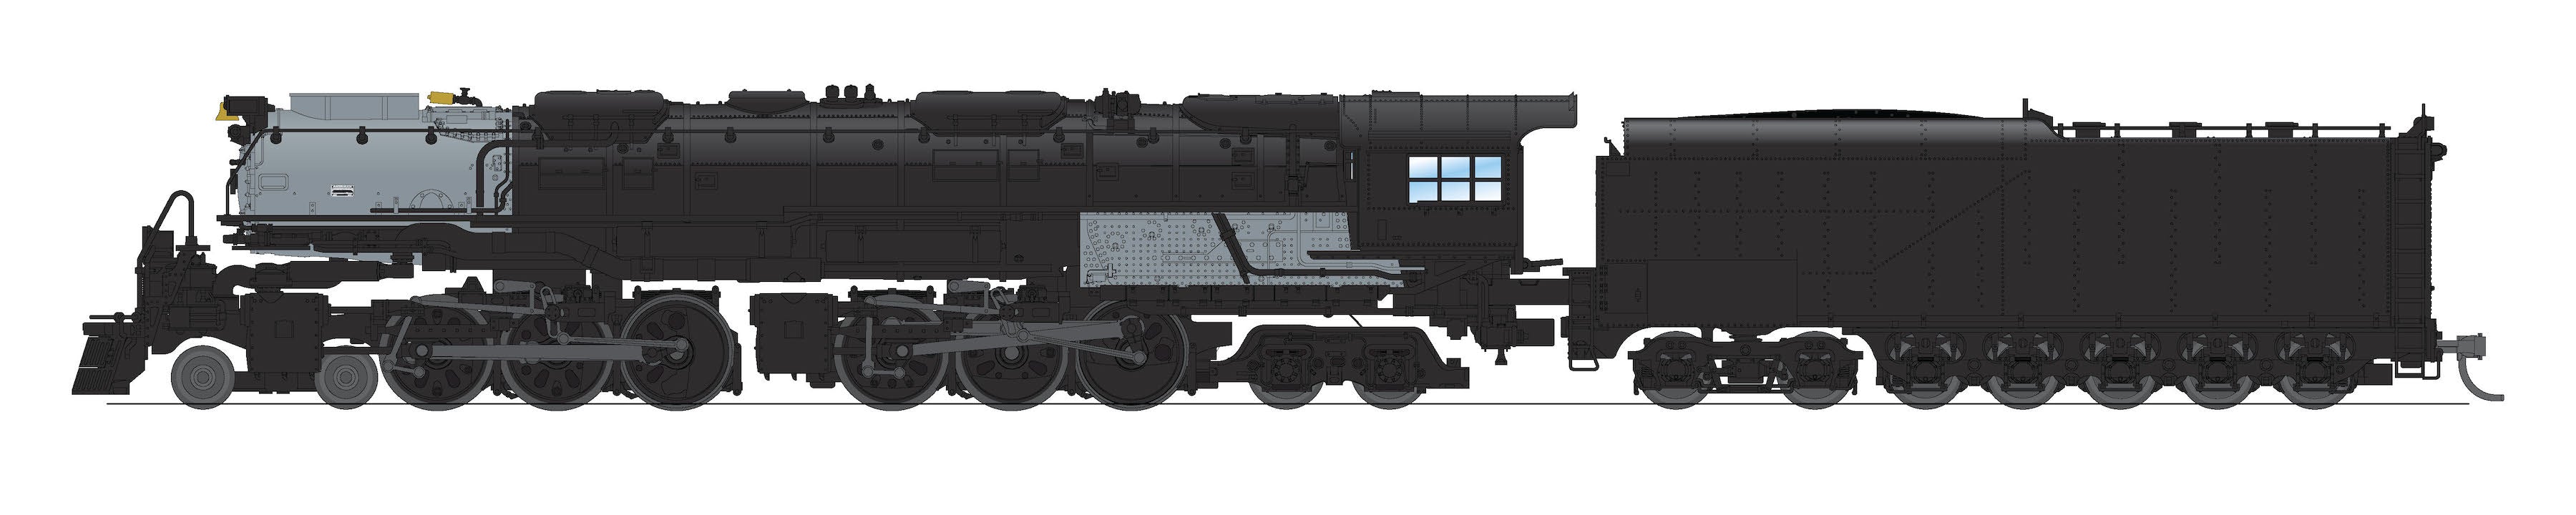 6991 UP Challenger 4-6-6-4, Unlettered, Black & Graphite, Coal Tender, Paragon4 Sound/DC/DCC, Smoke, N